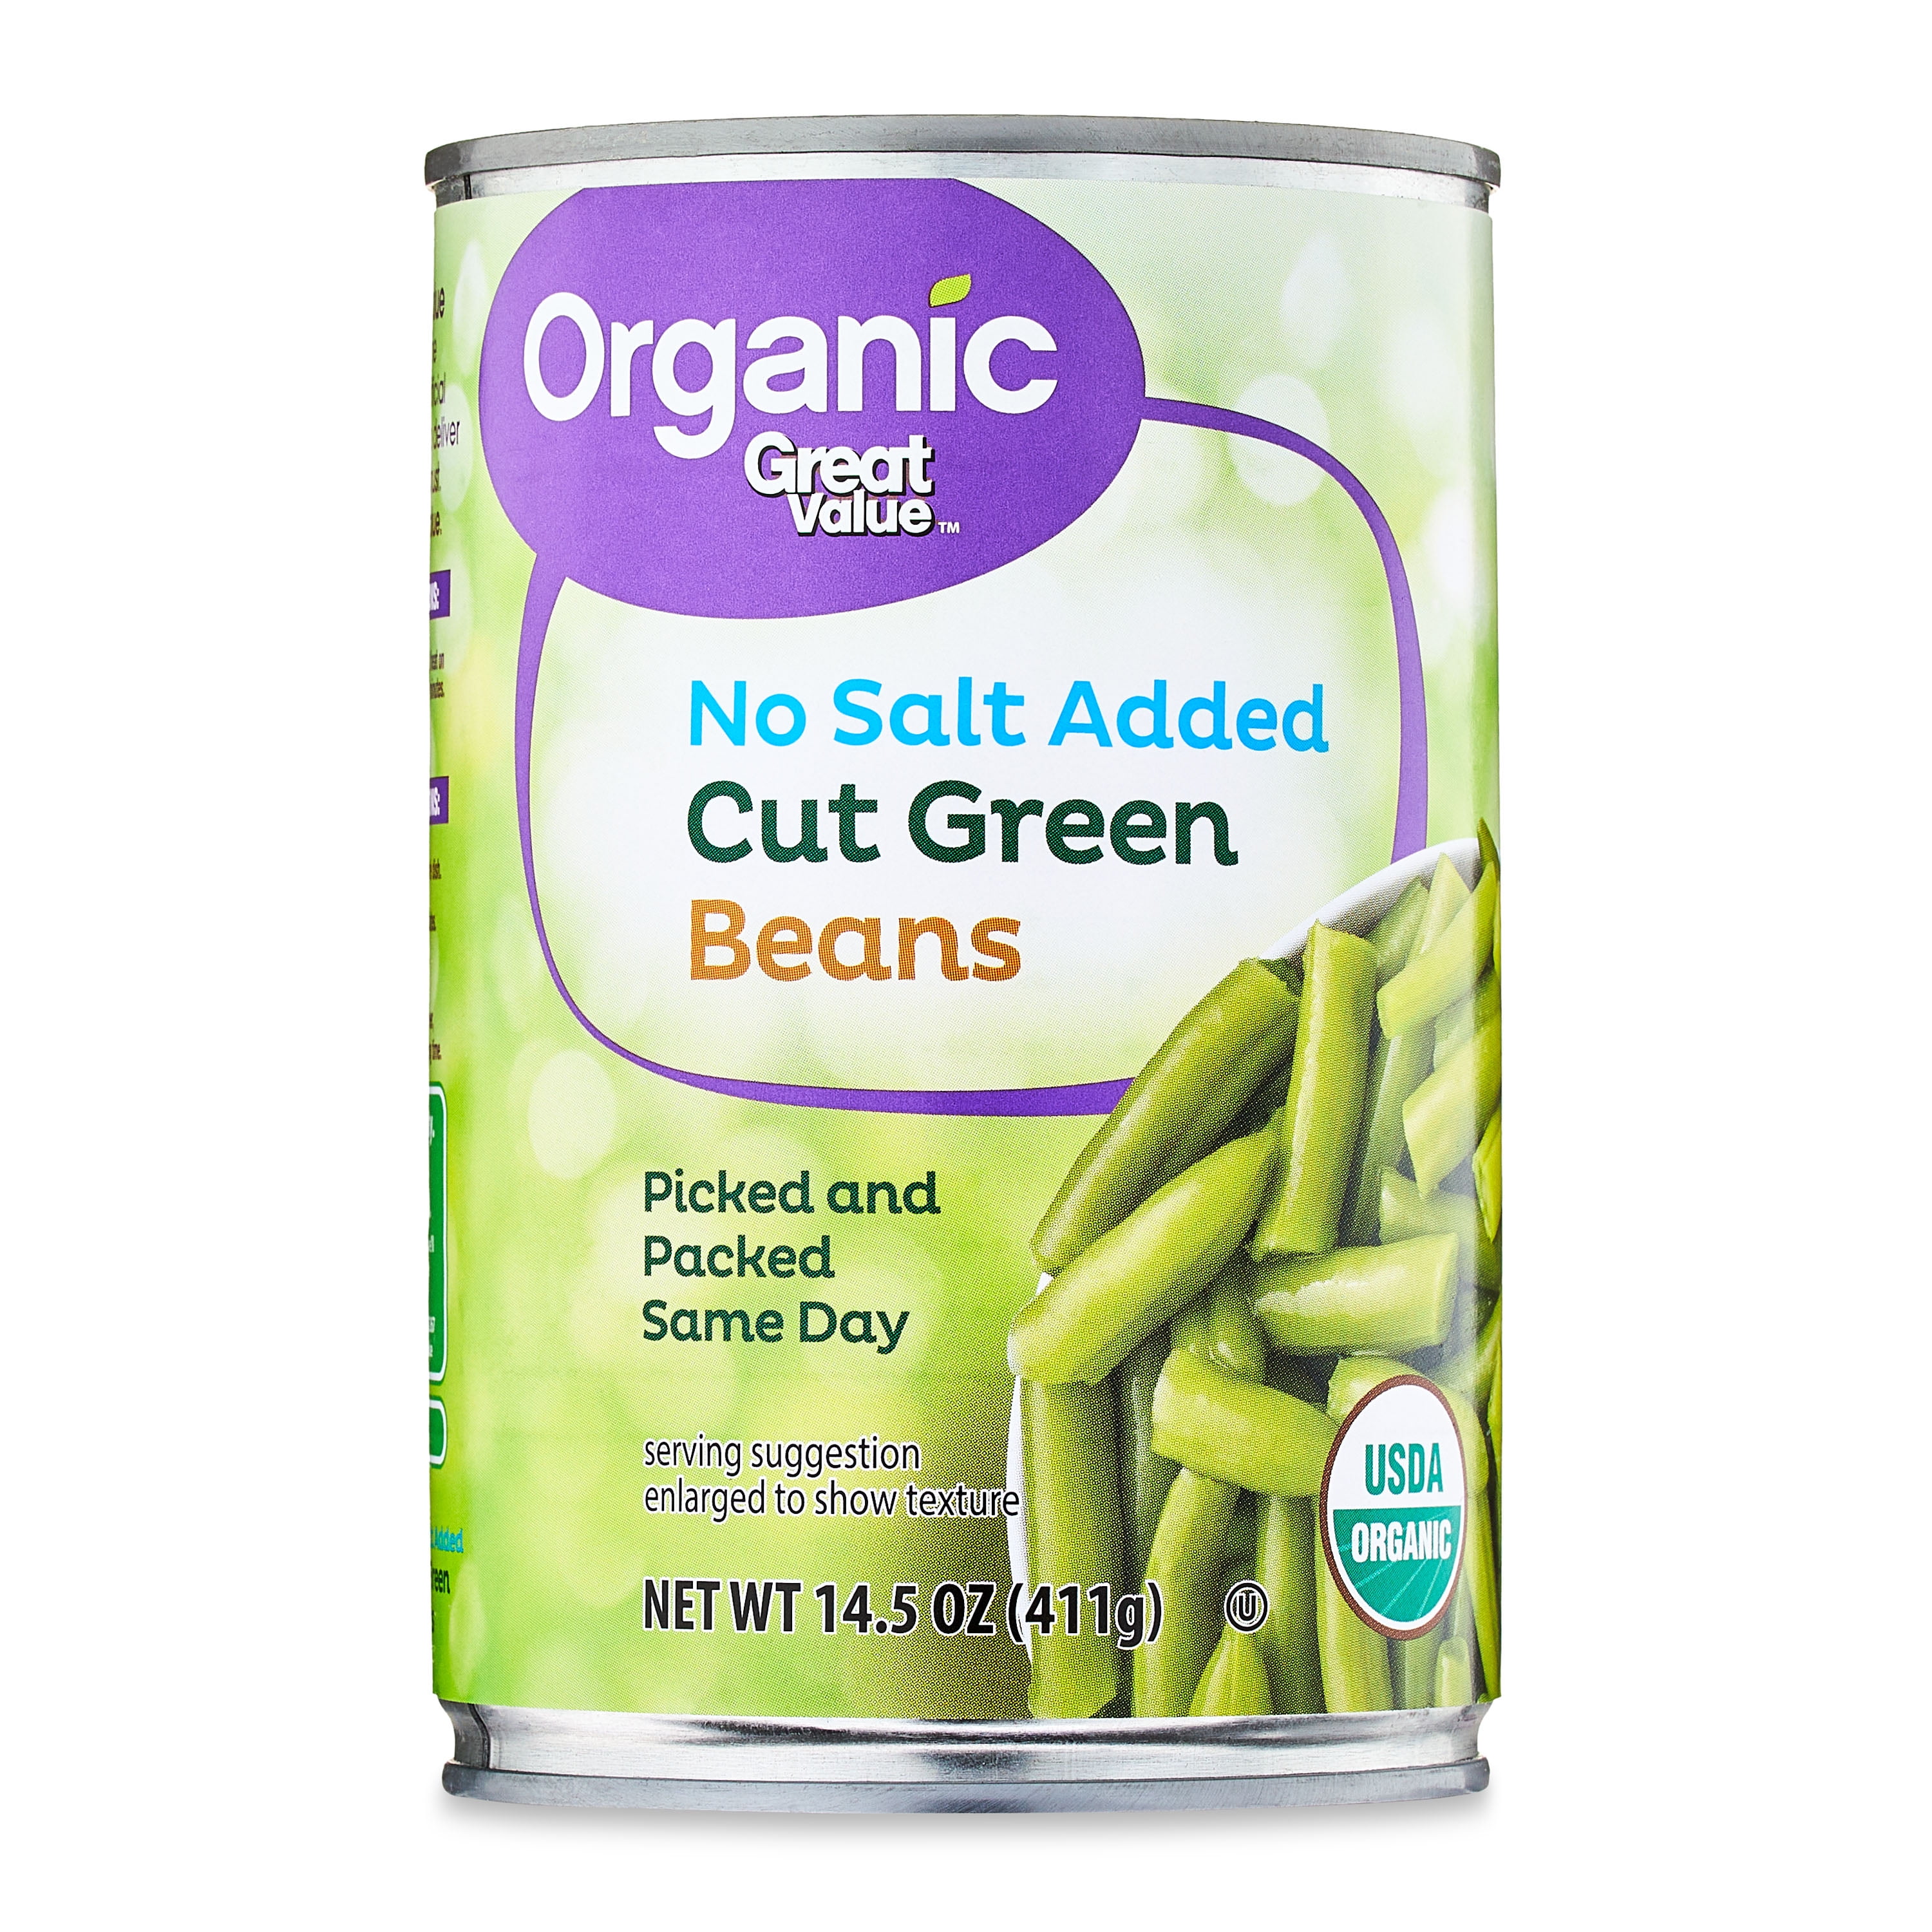 Great Value Frozen Cut Green Beans, 12 oz Steamable Bag